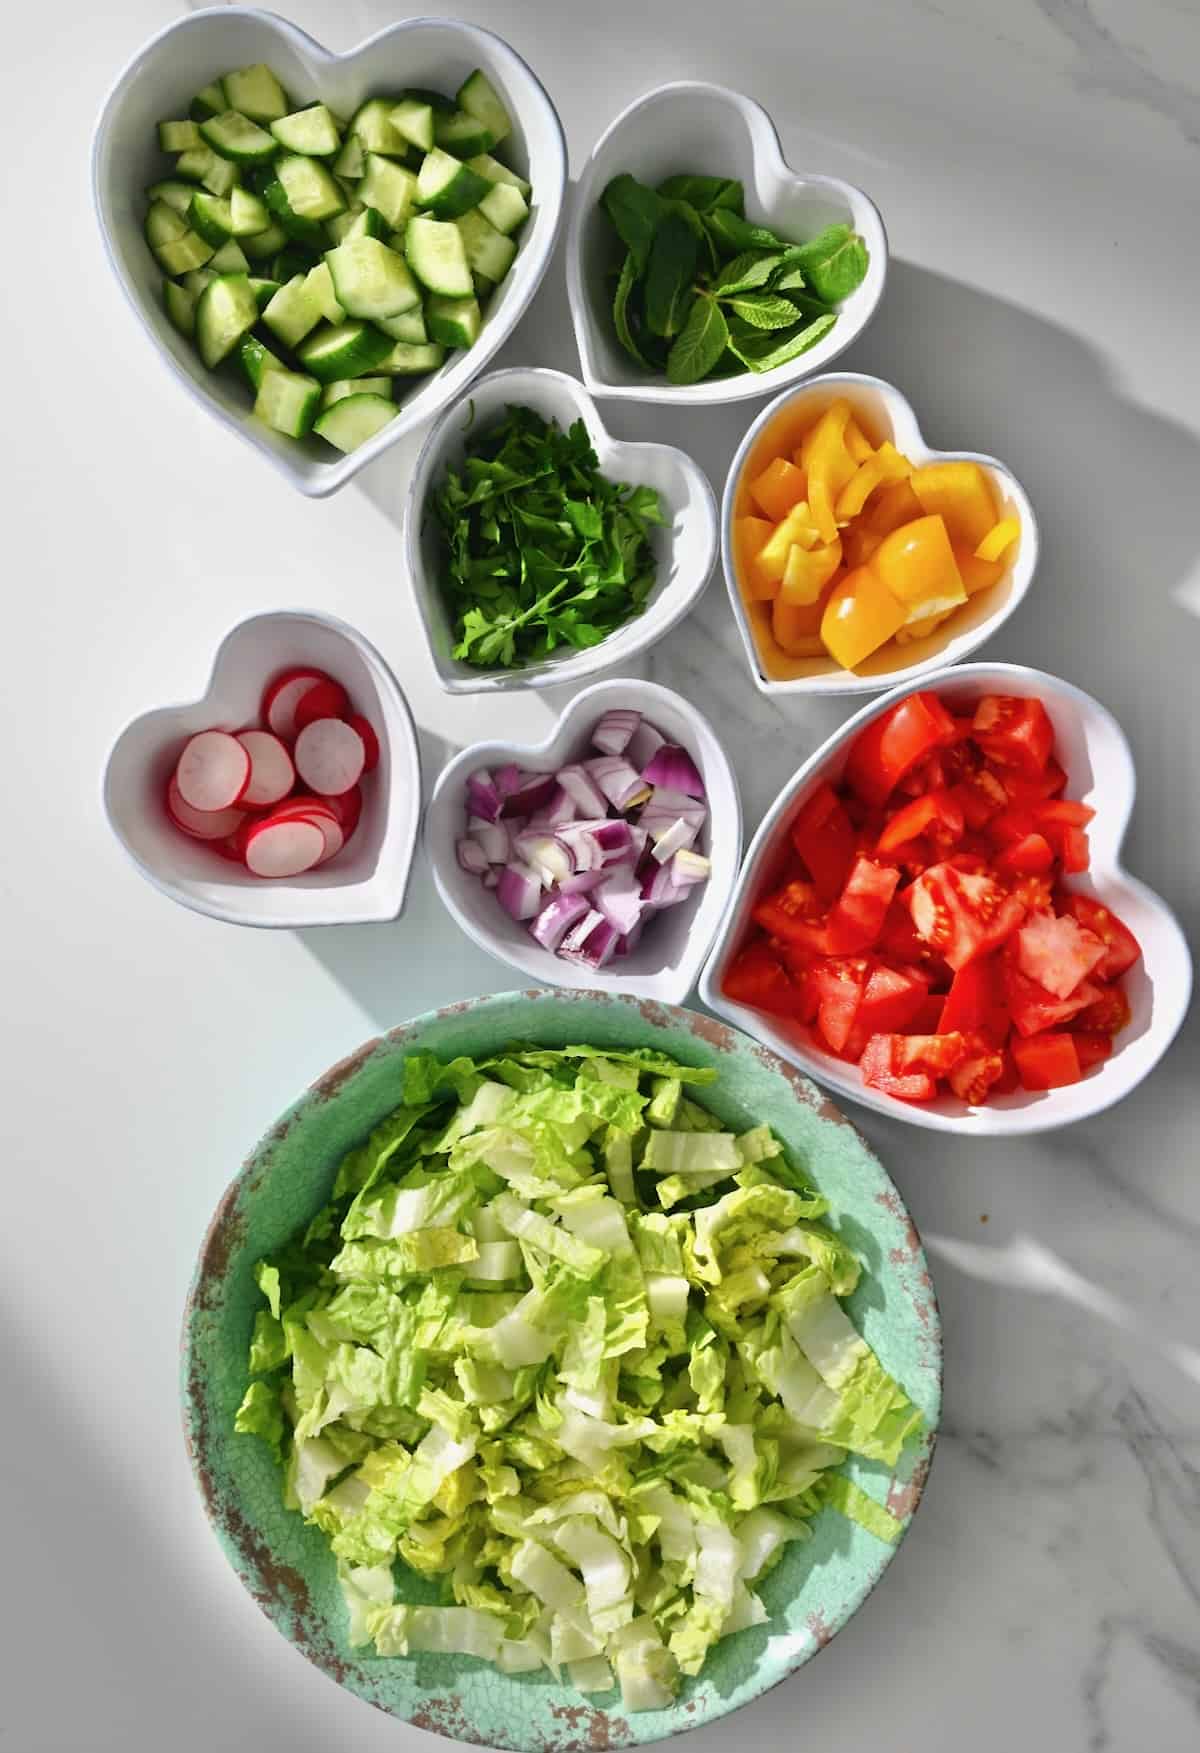 Chopped vegetables for fresh salad